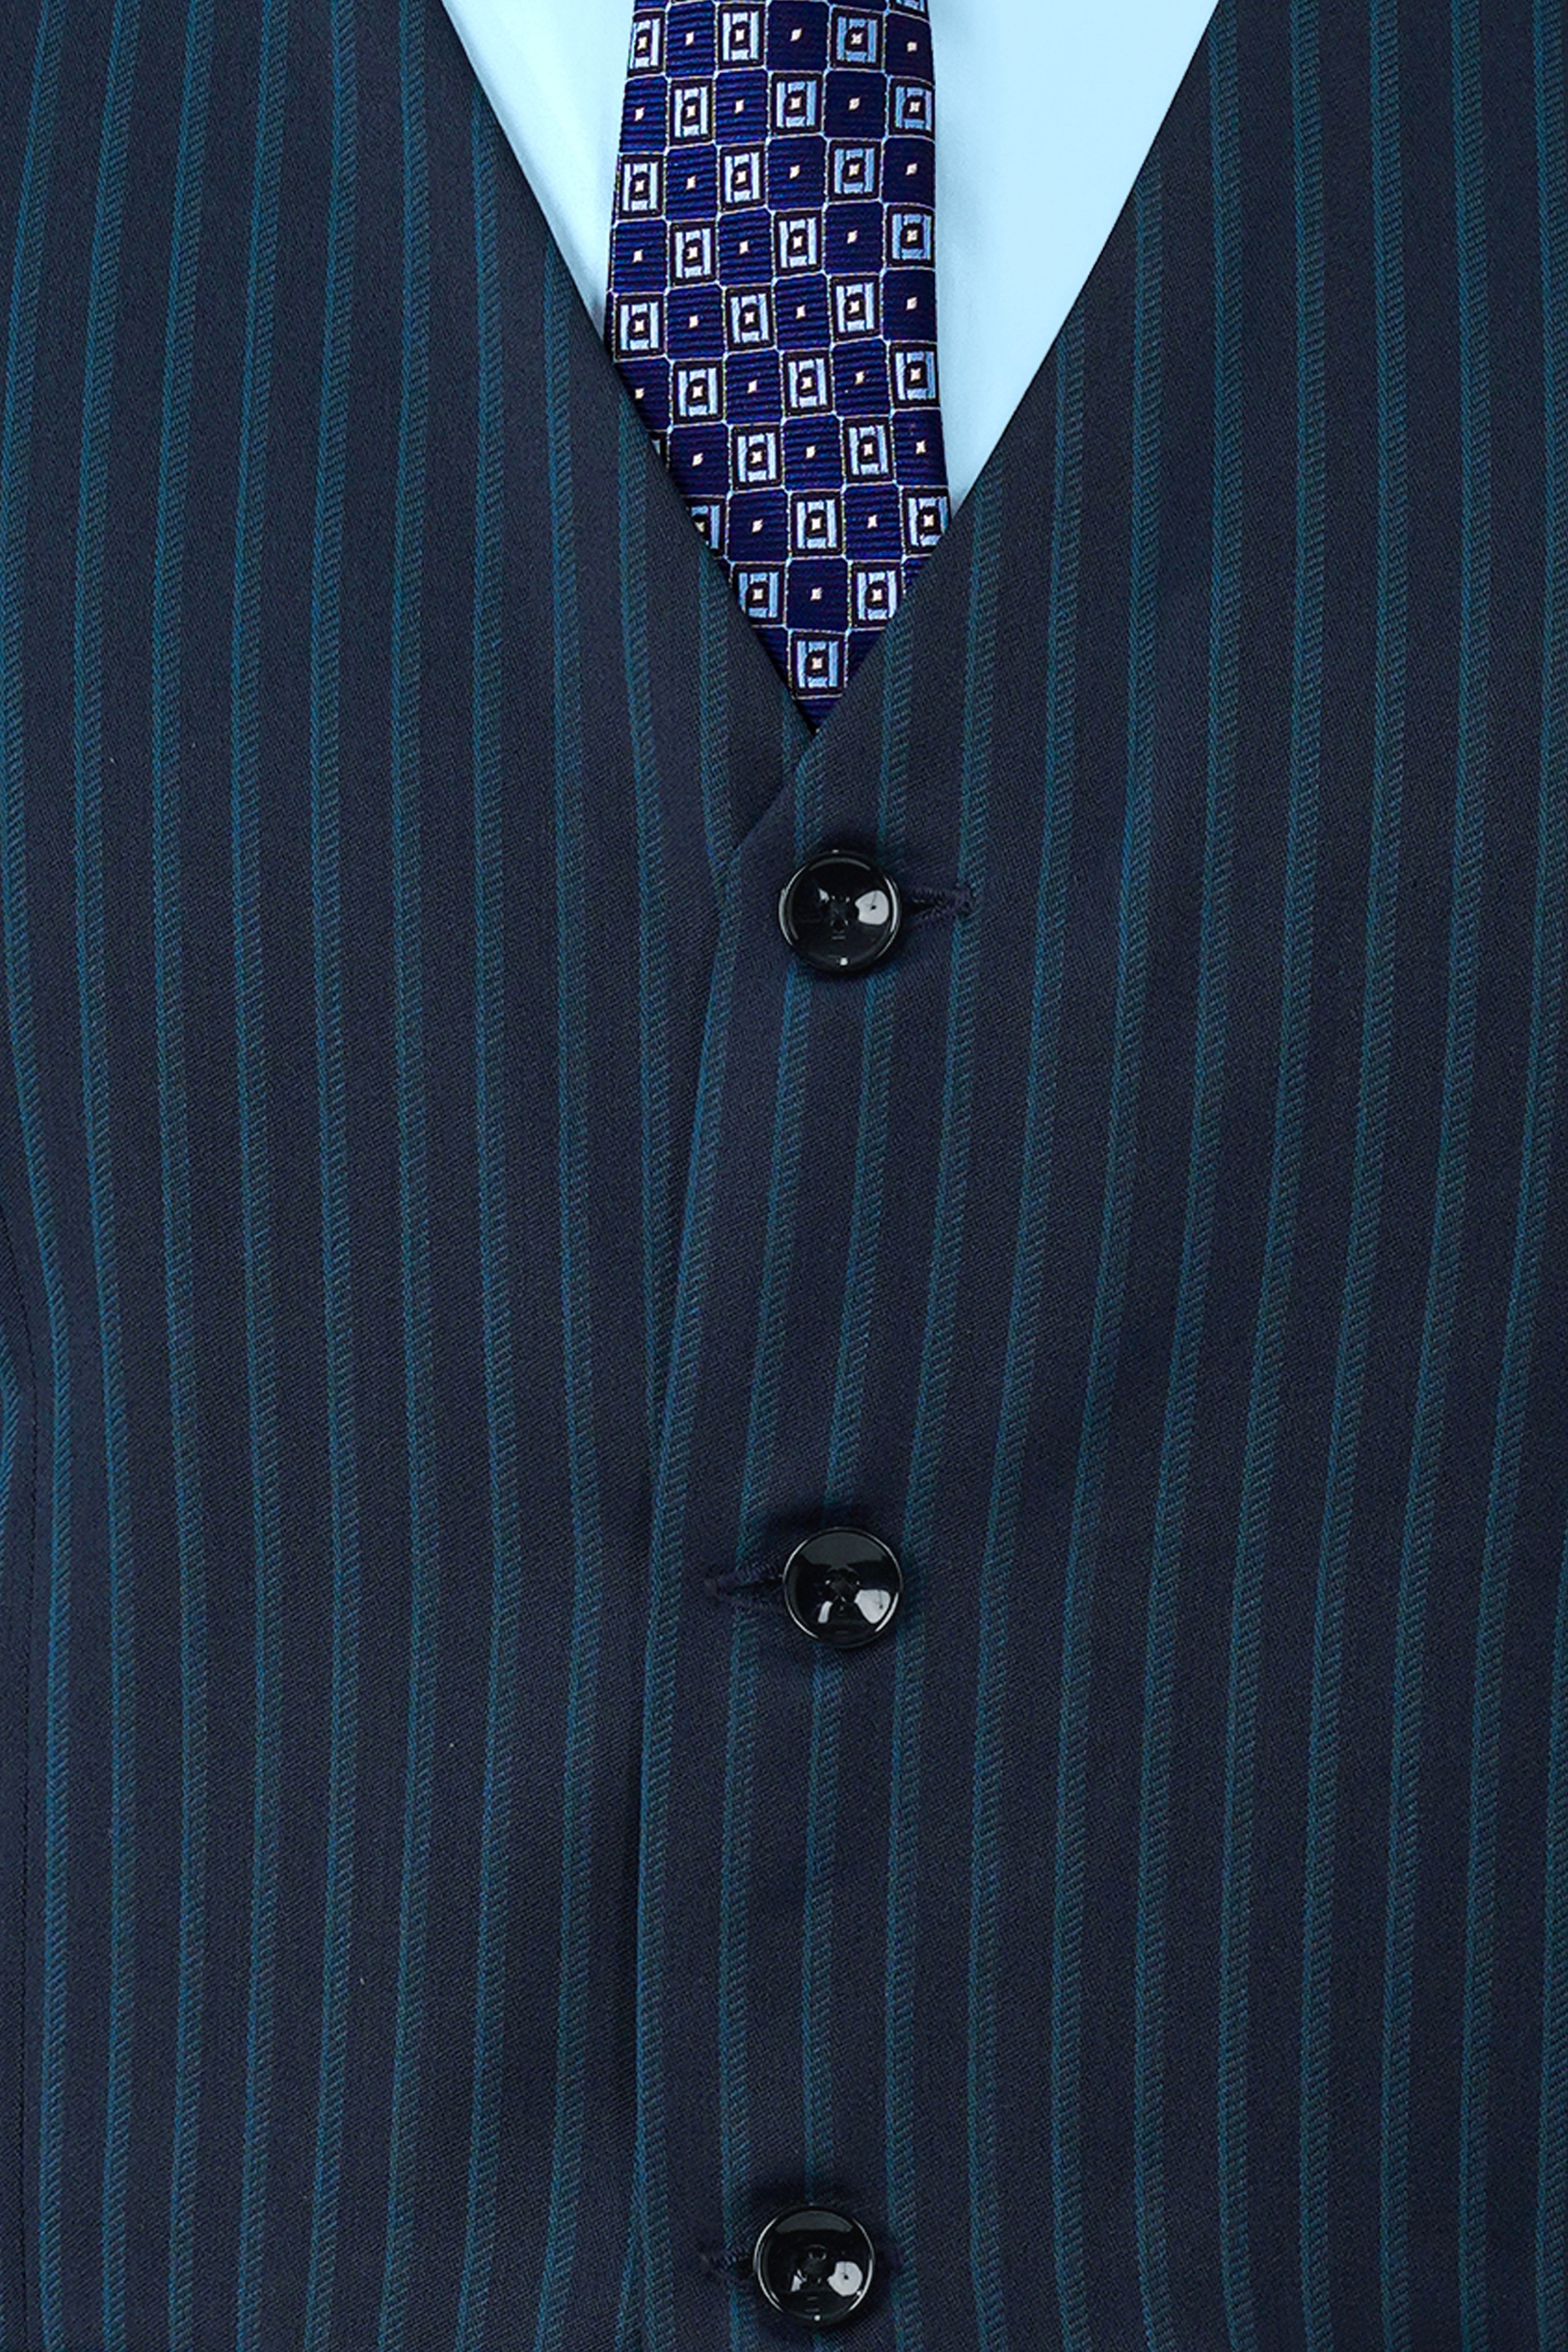 Ebony Blue and Marine Blue Pin Striped Wool Rich Waistcoat